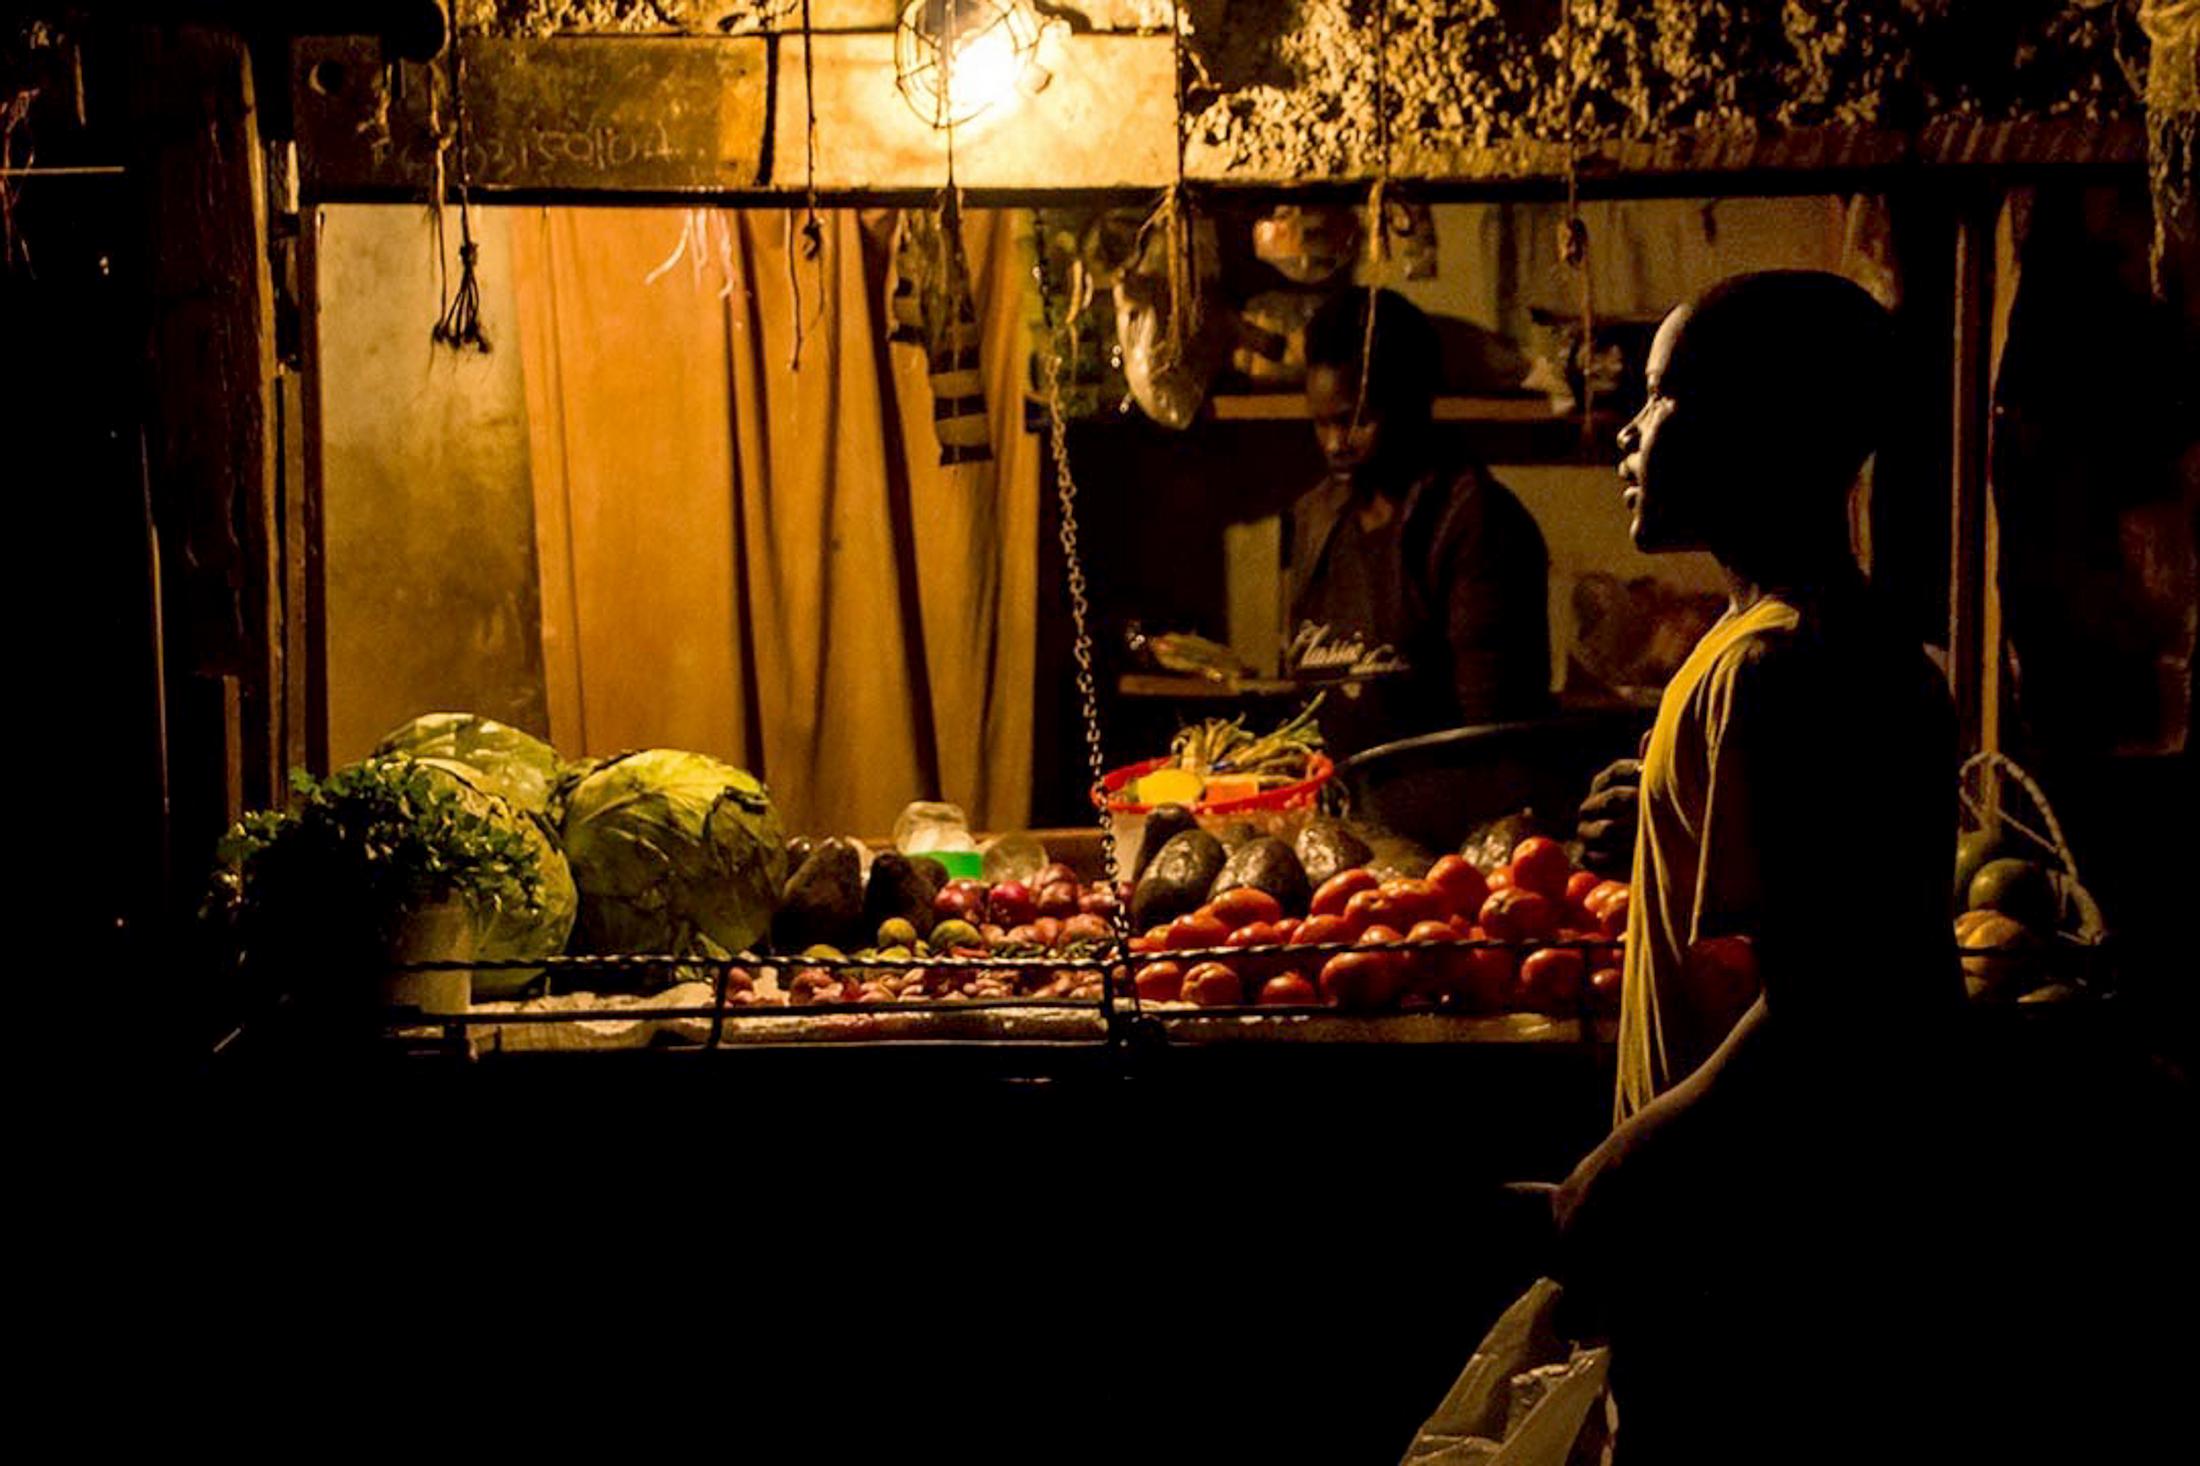 Brian Otieno | Kibera Stories